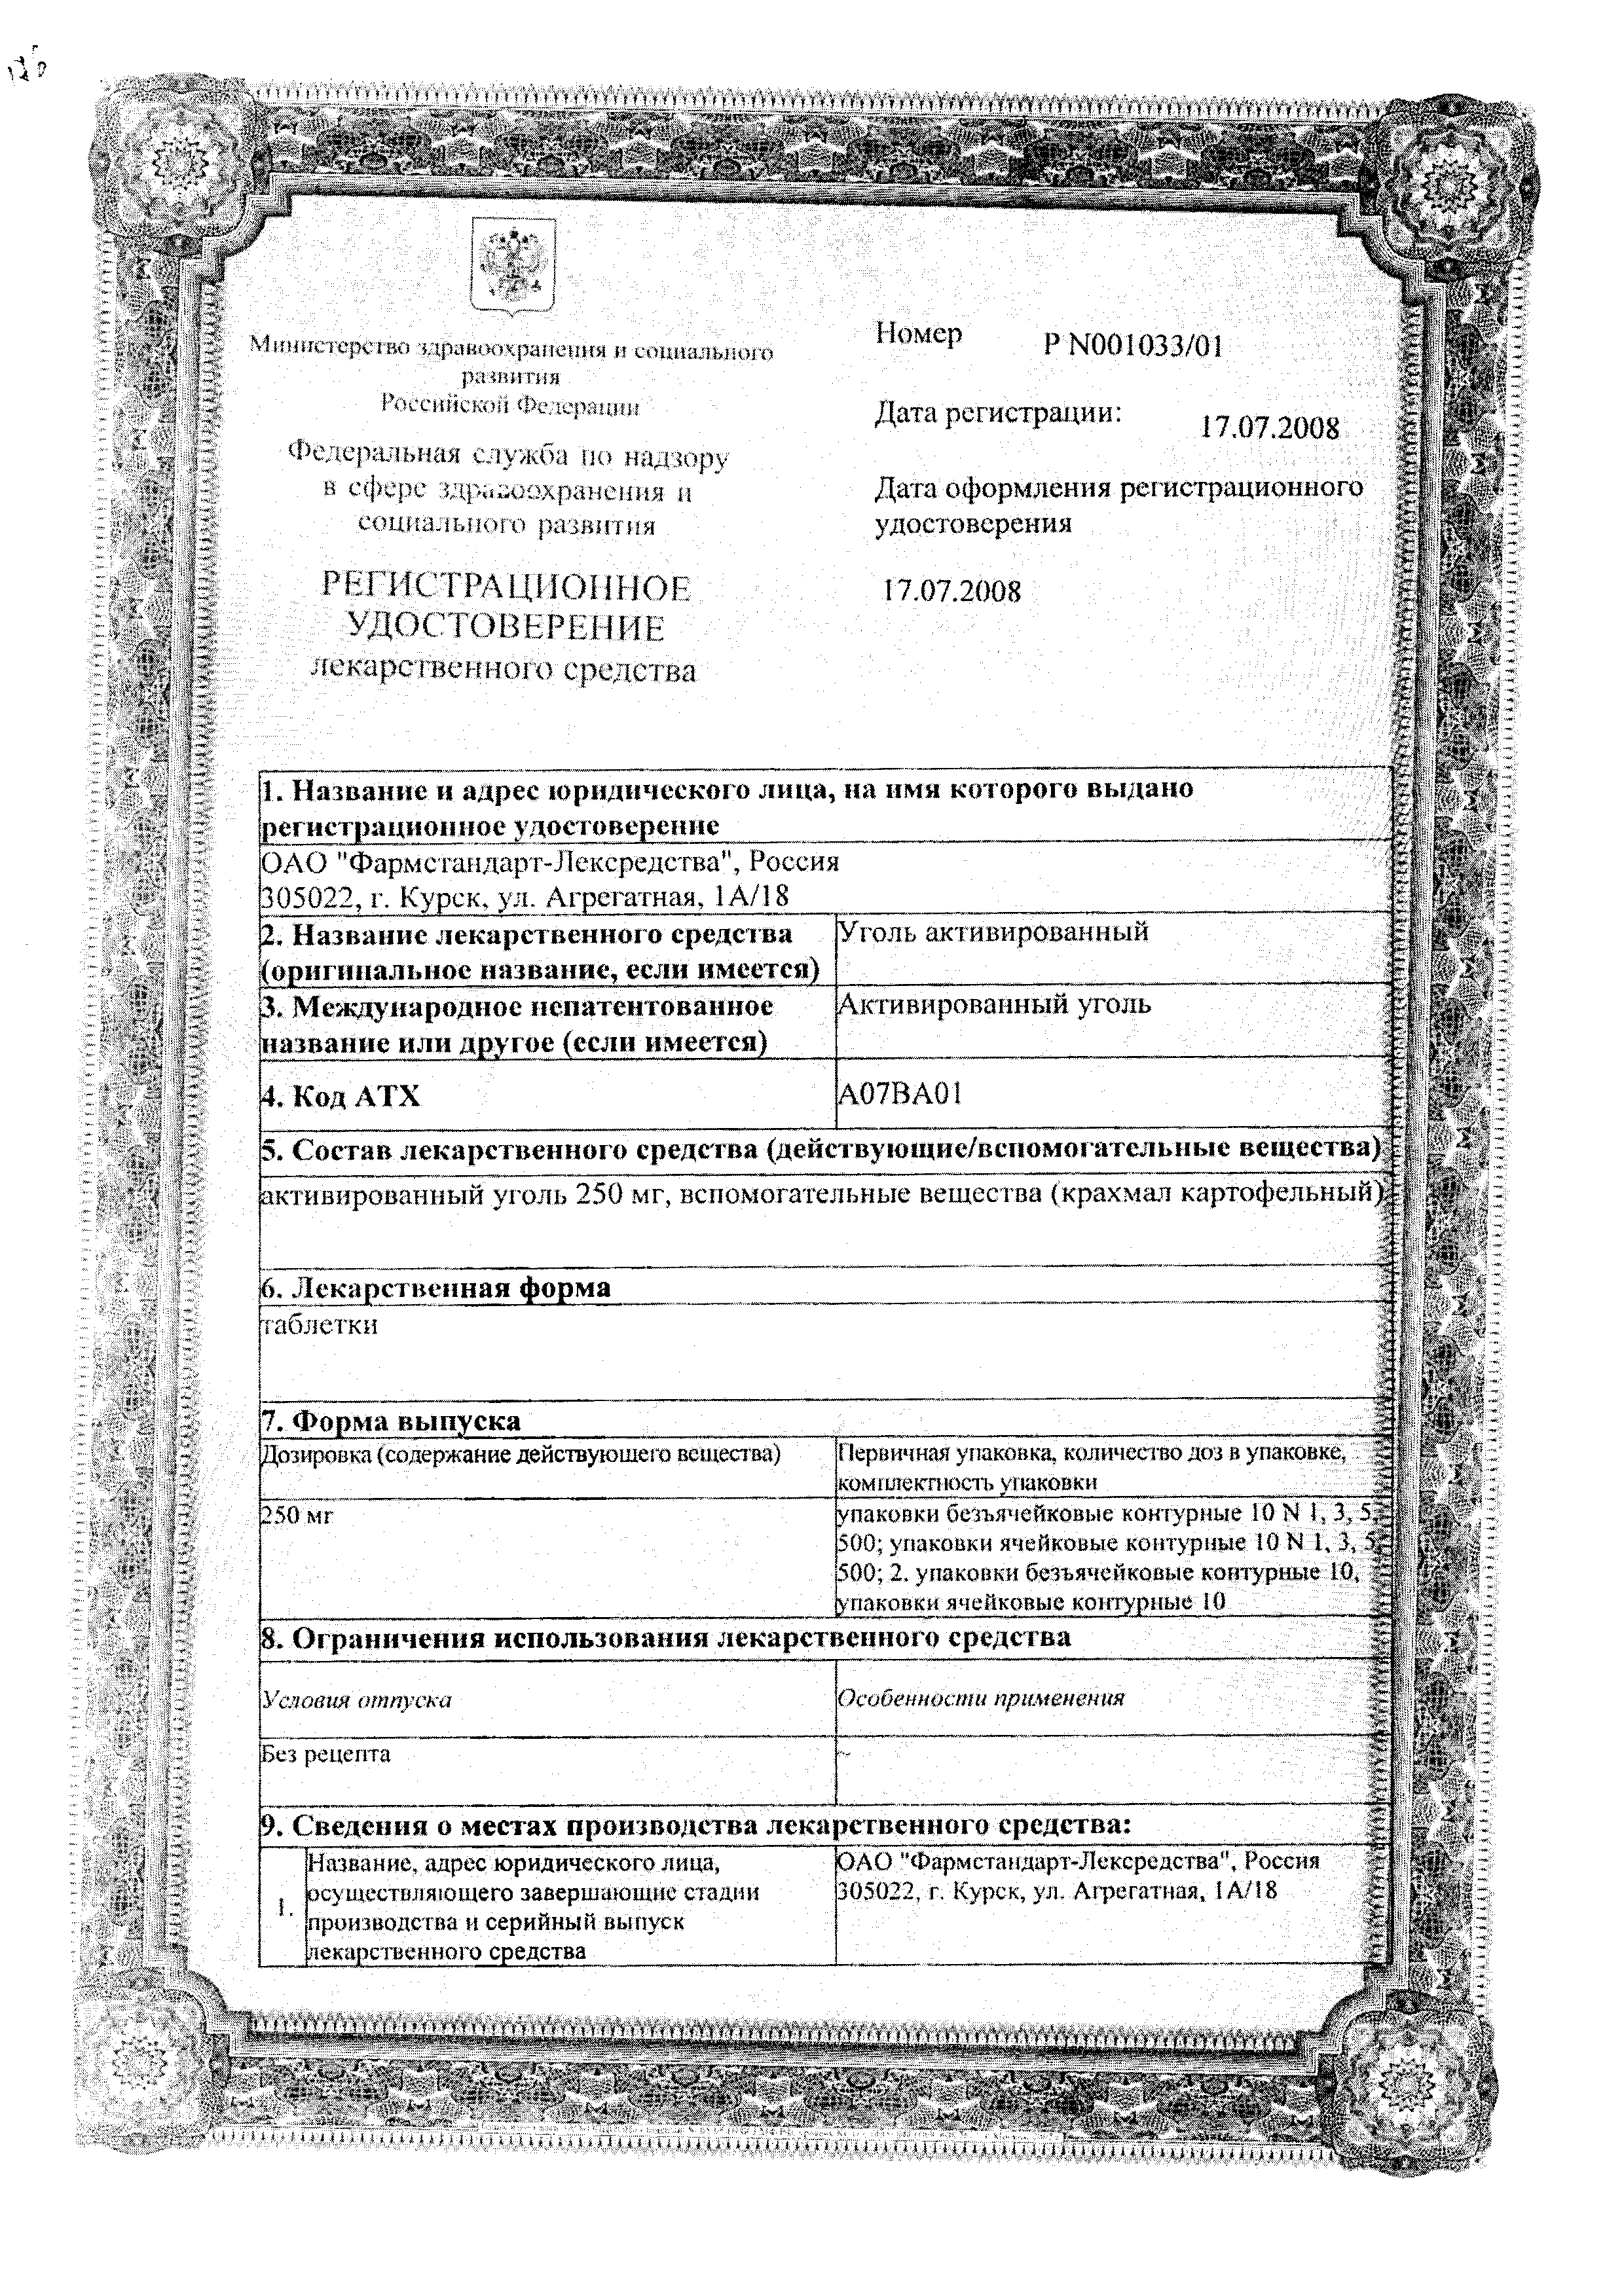 Уголь активированный Фармстандарт сертификат